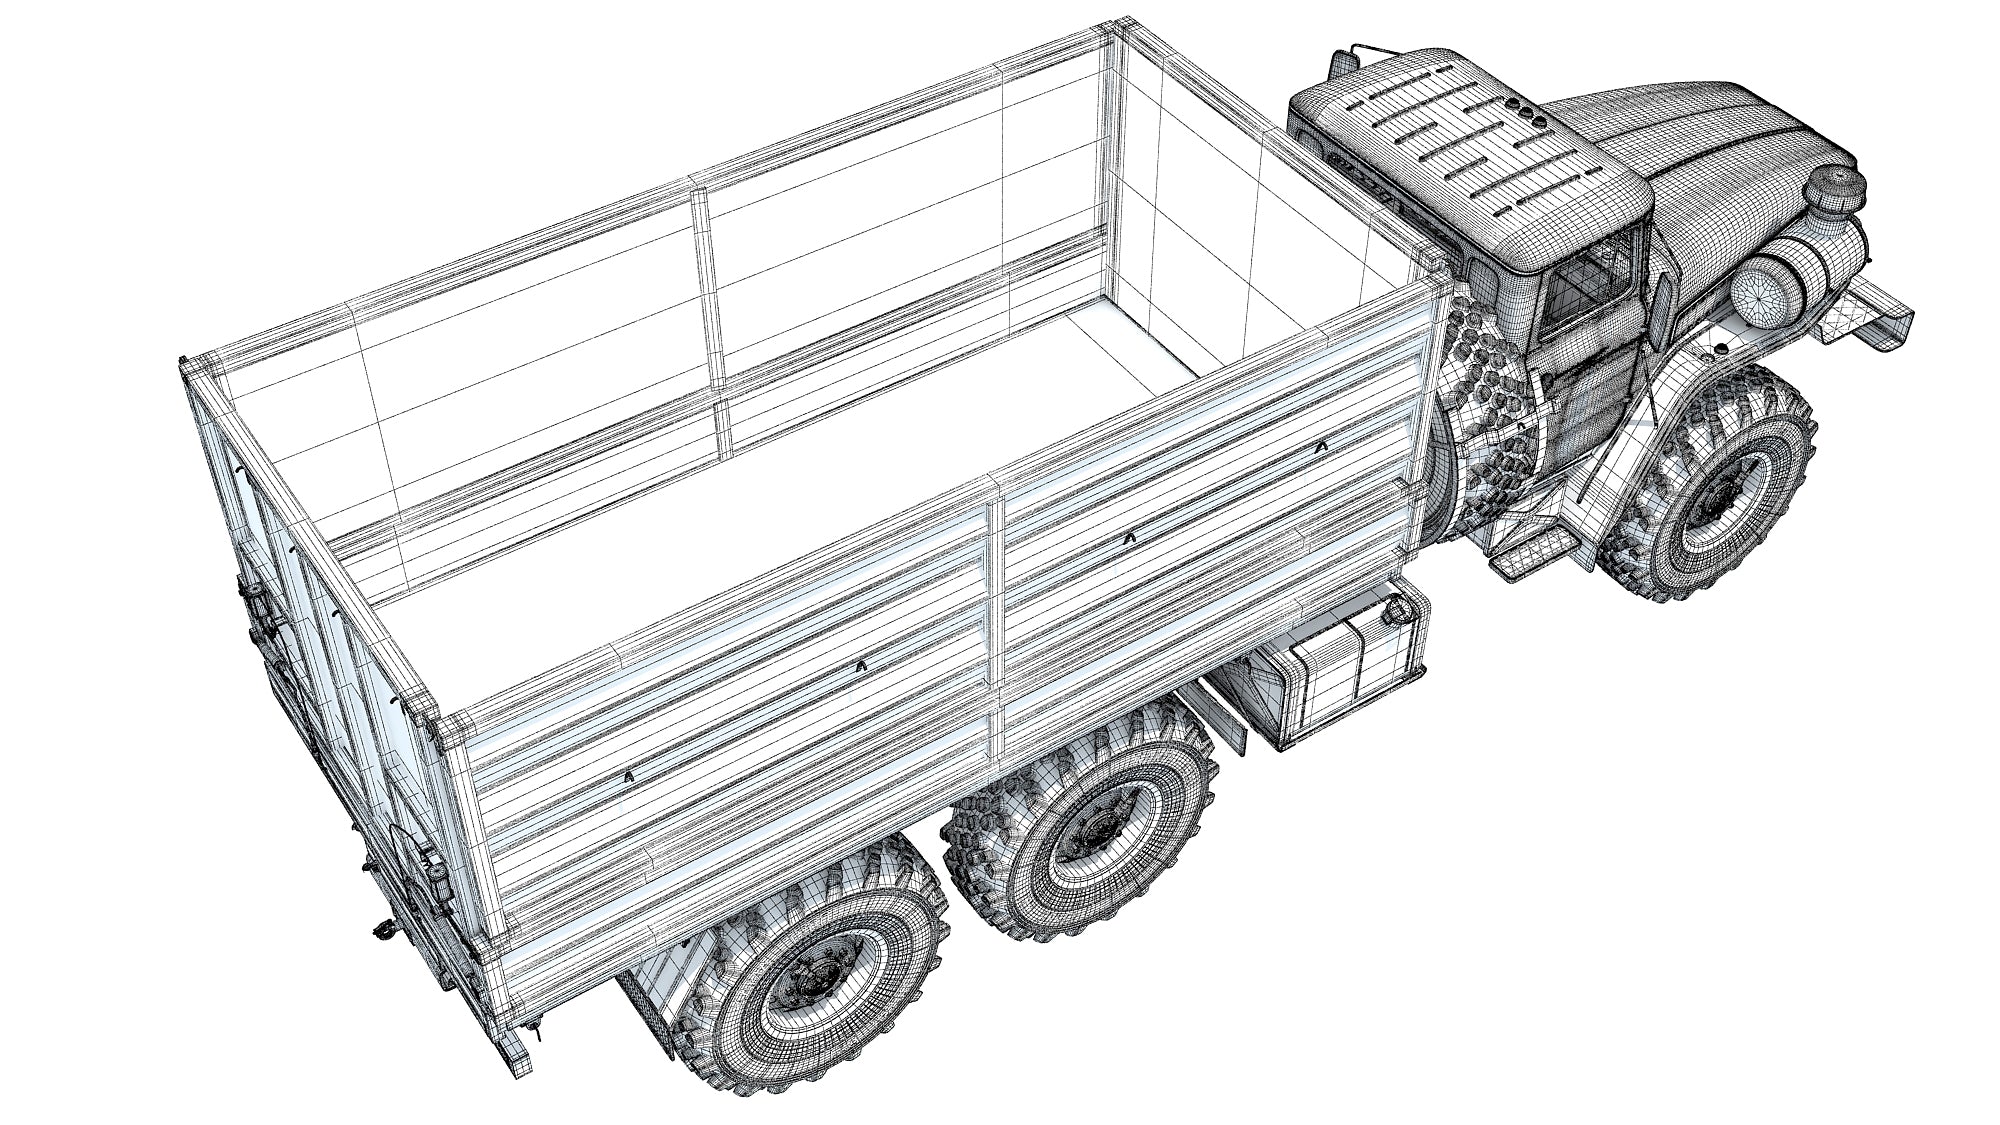 URAL Civilian Truck Off Road 6x6 Vehicle